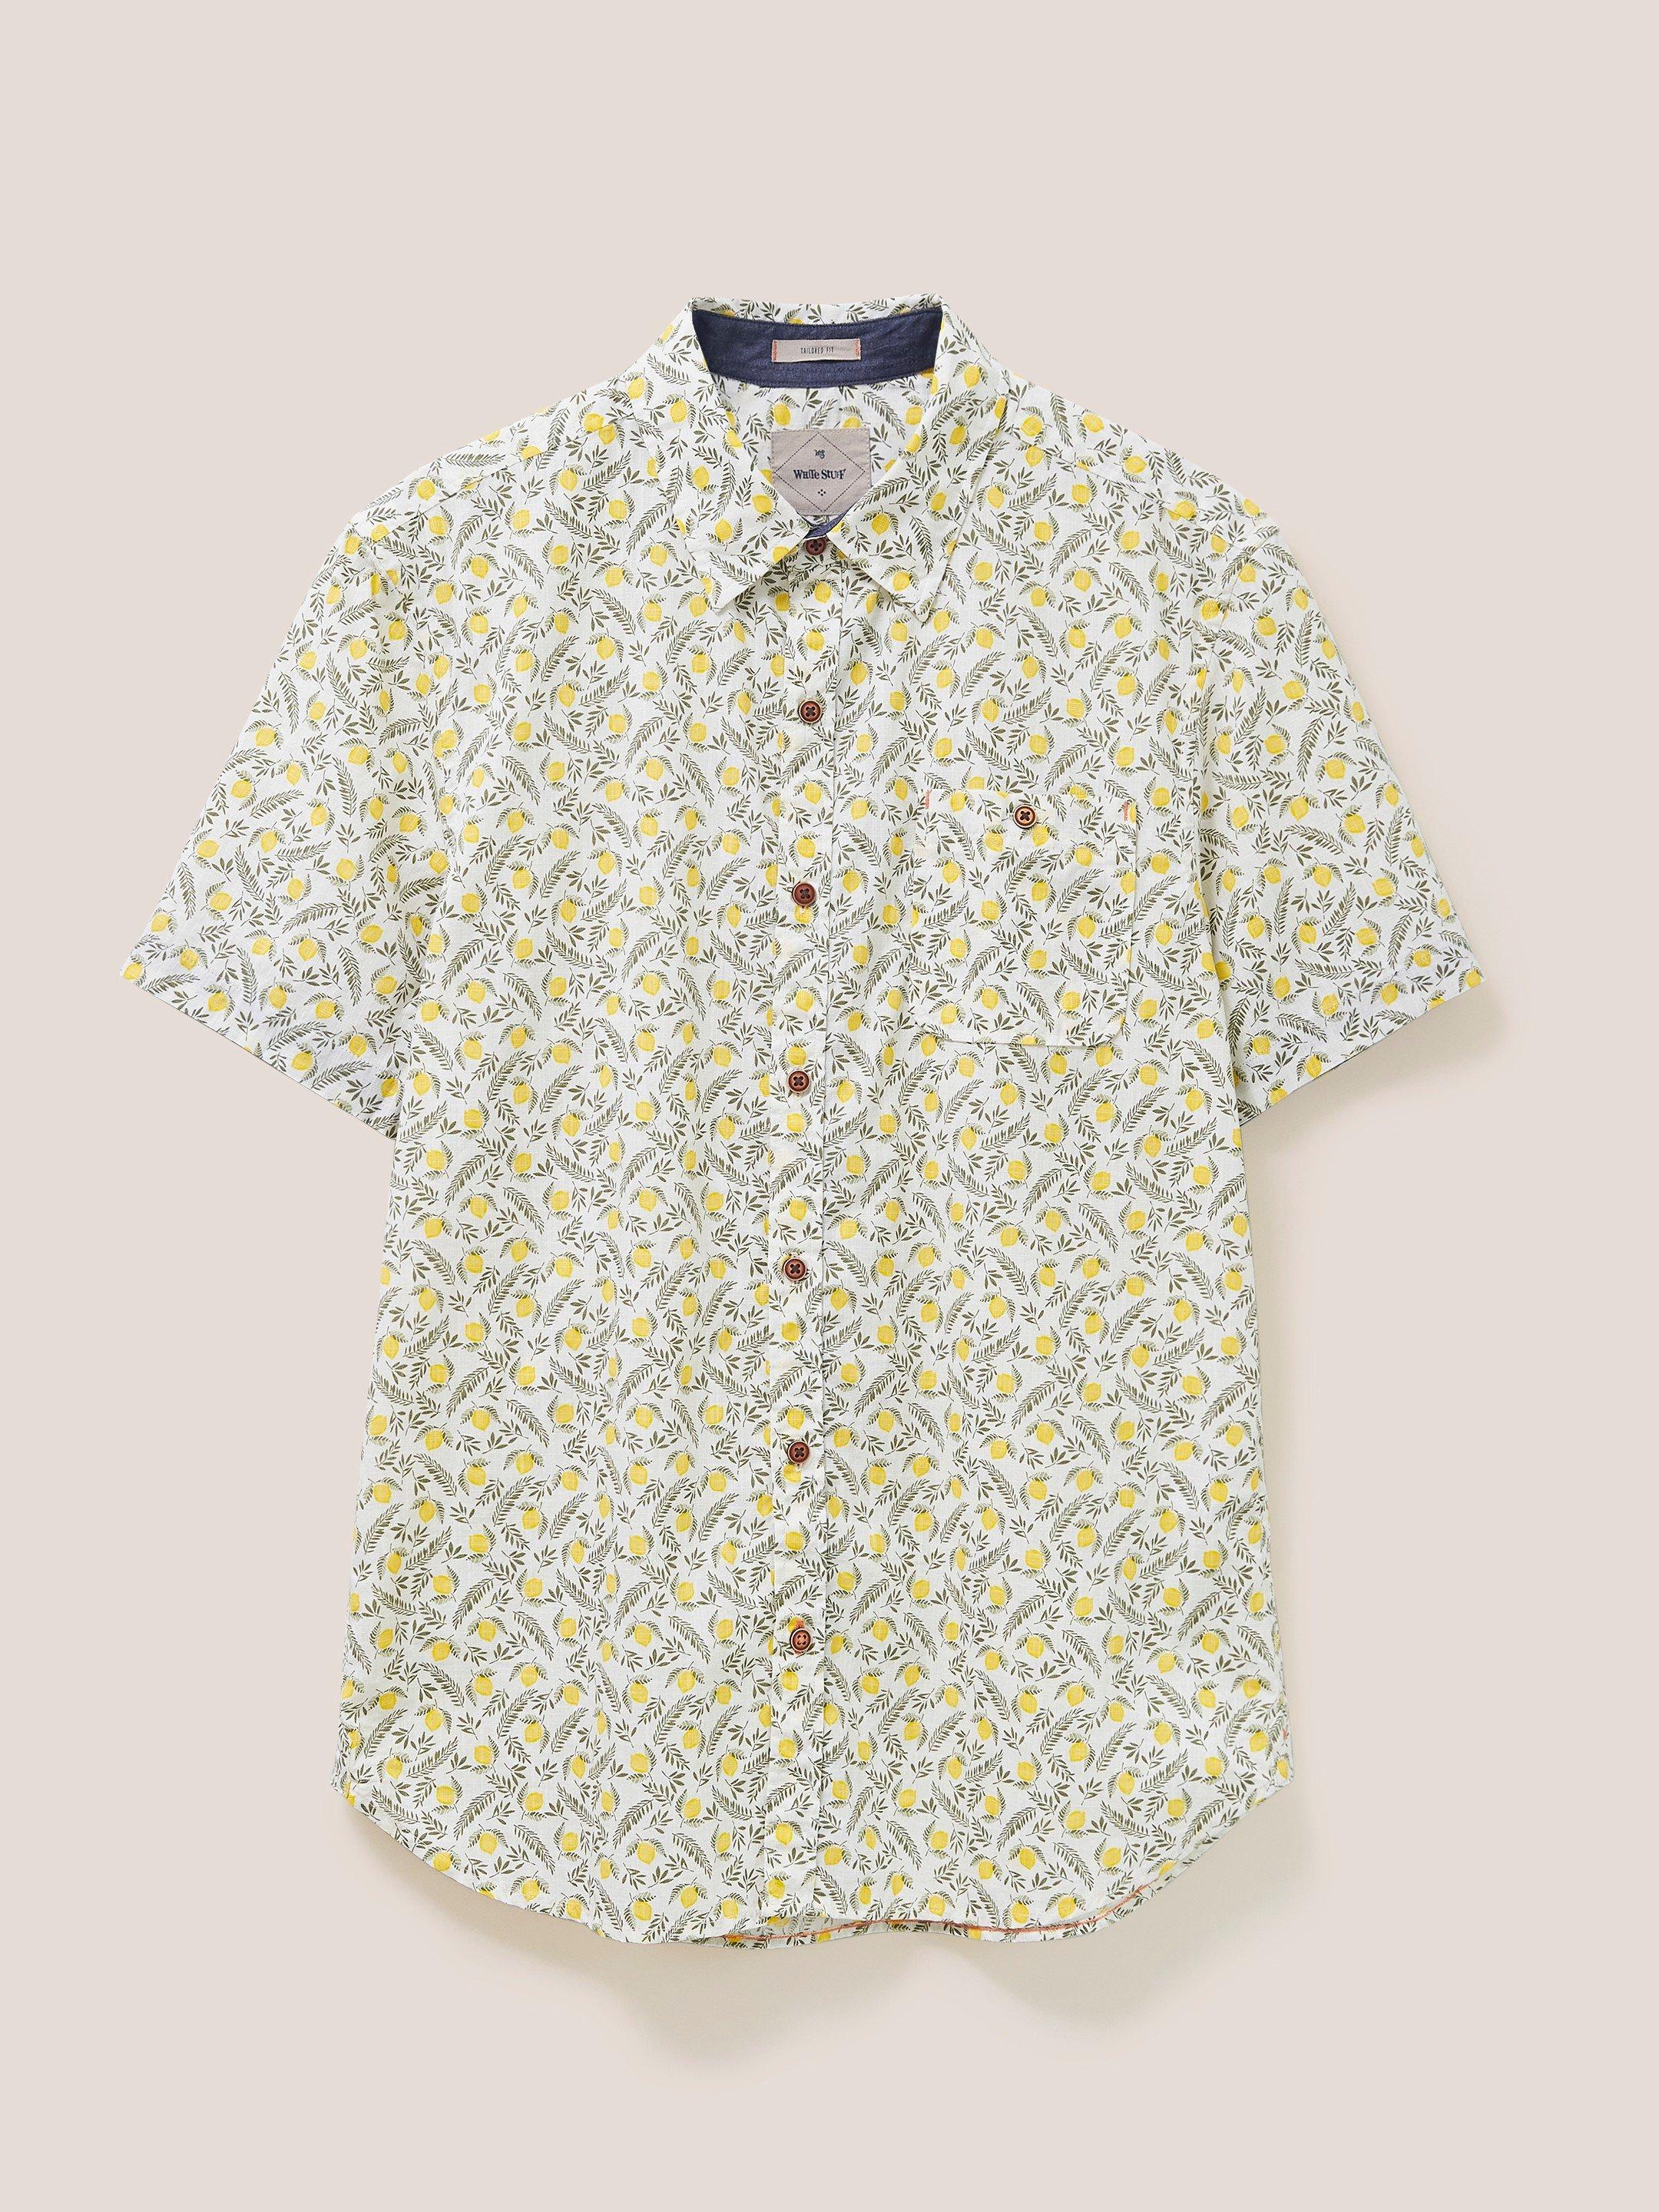 Sicilian Lemon Printed Shirt in YELLOW MLT - FLAT FRONT